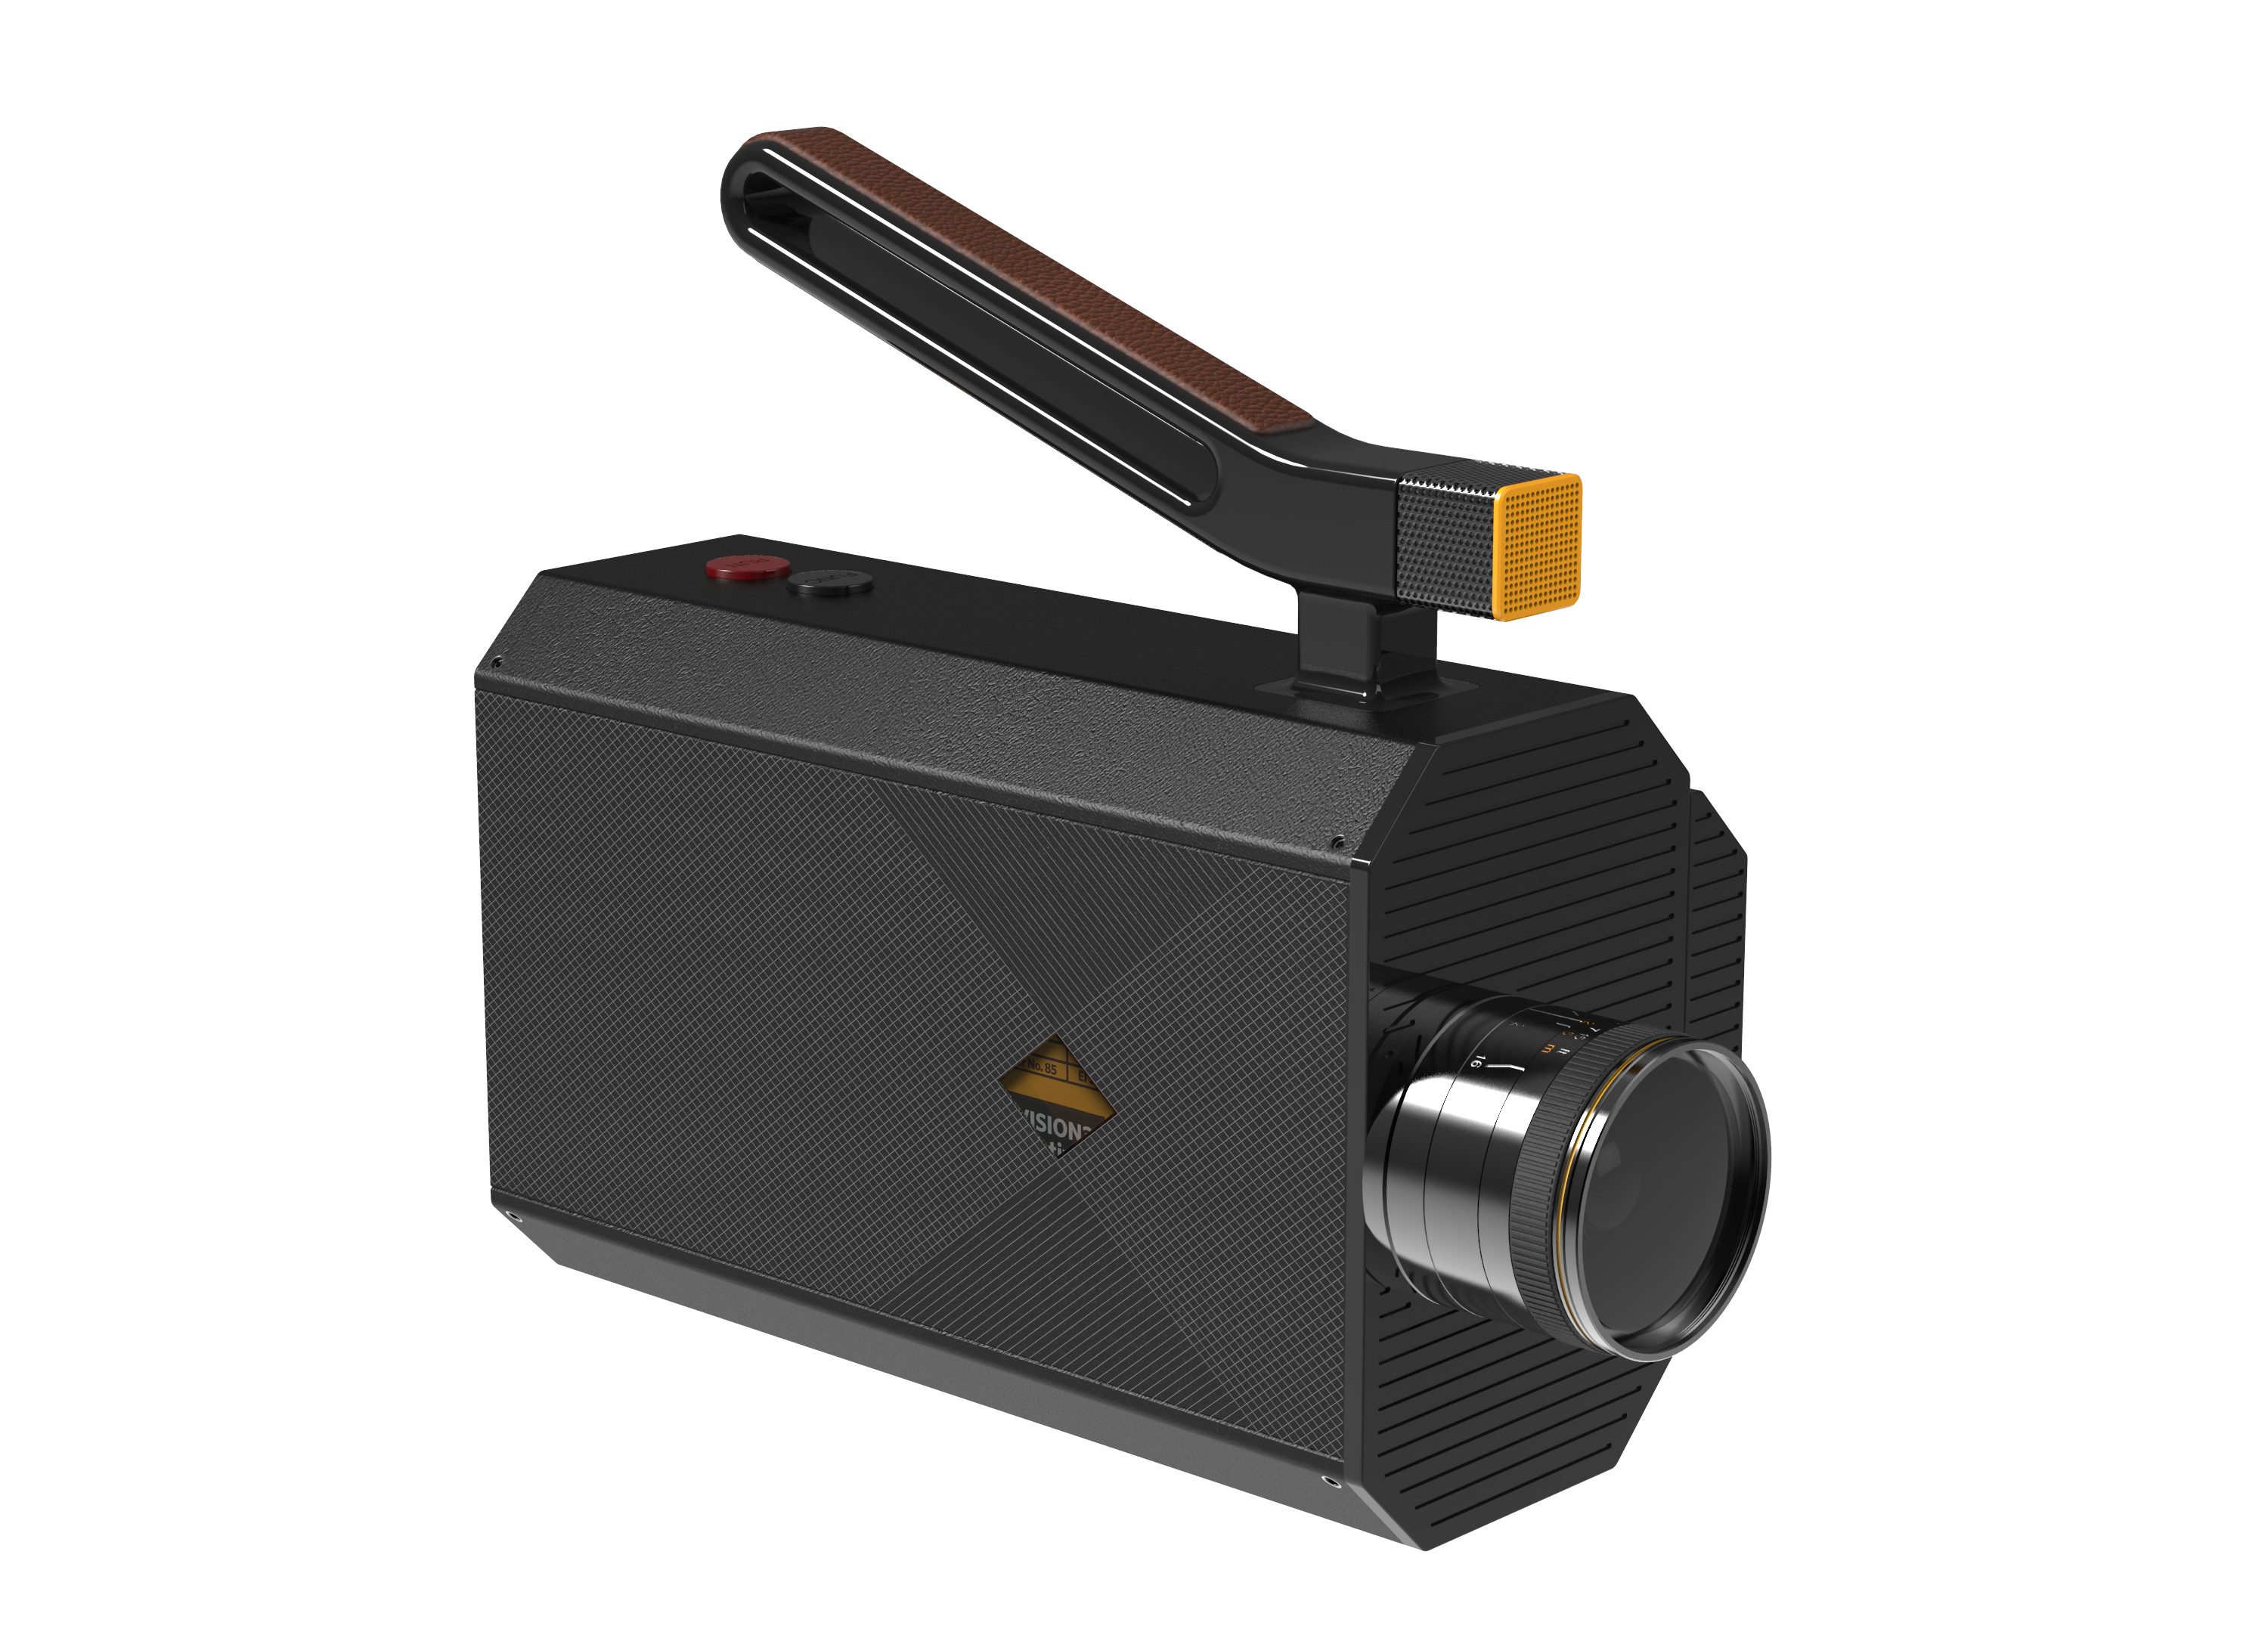 Kodak's new Super 8 camera designed by Yves Béhar